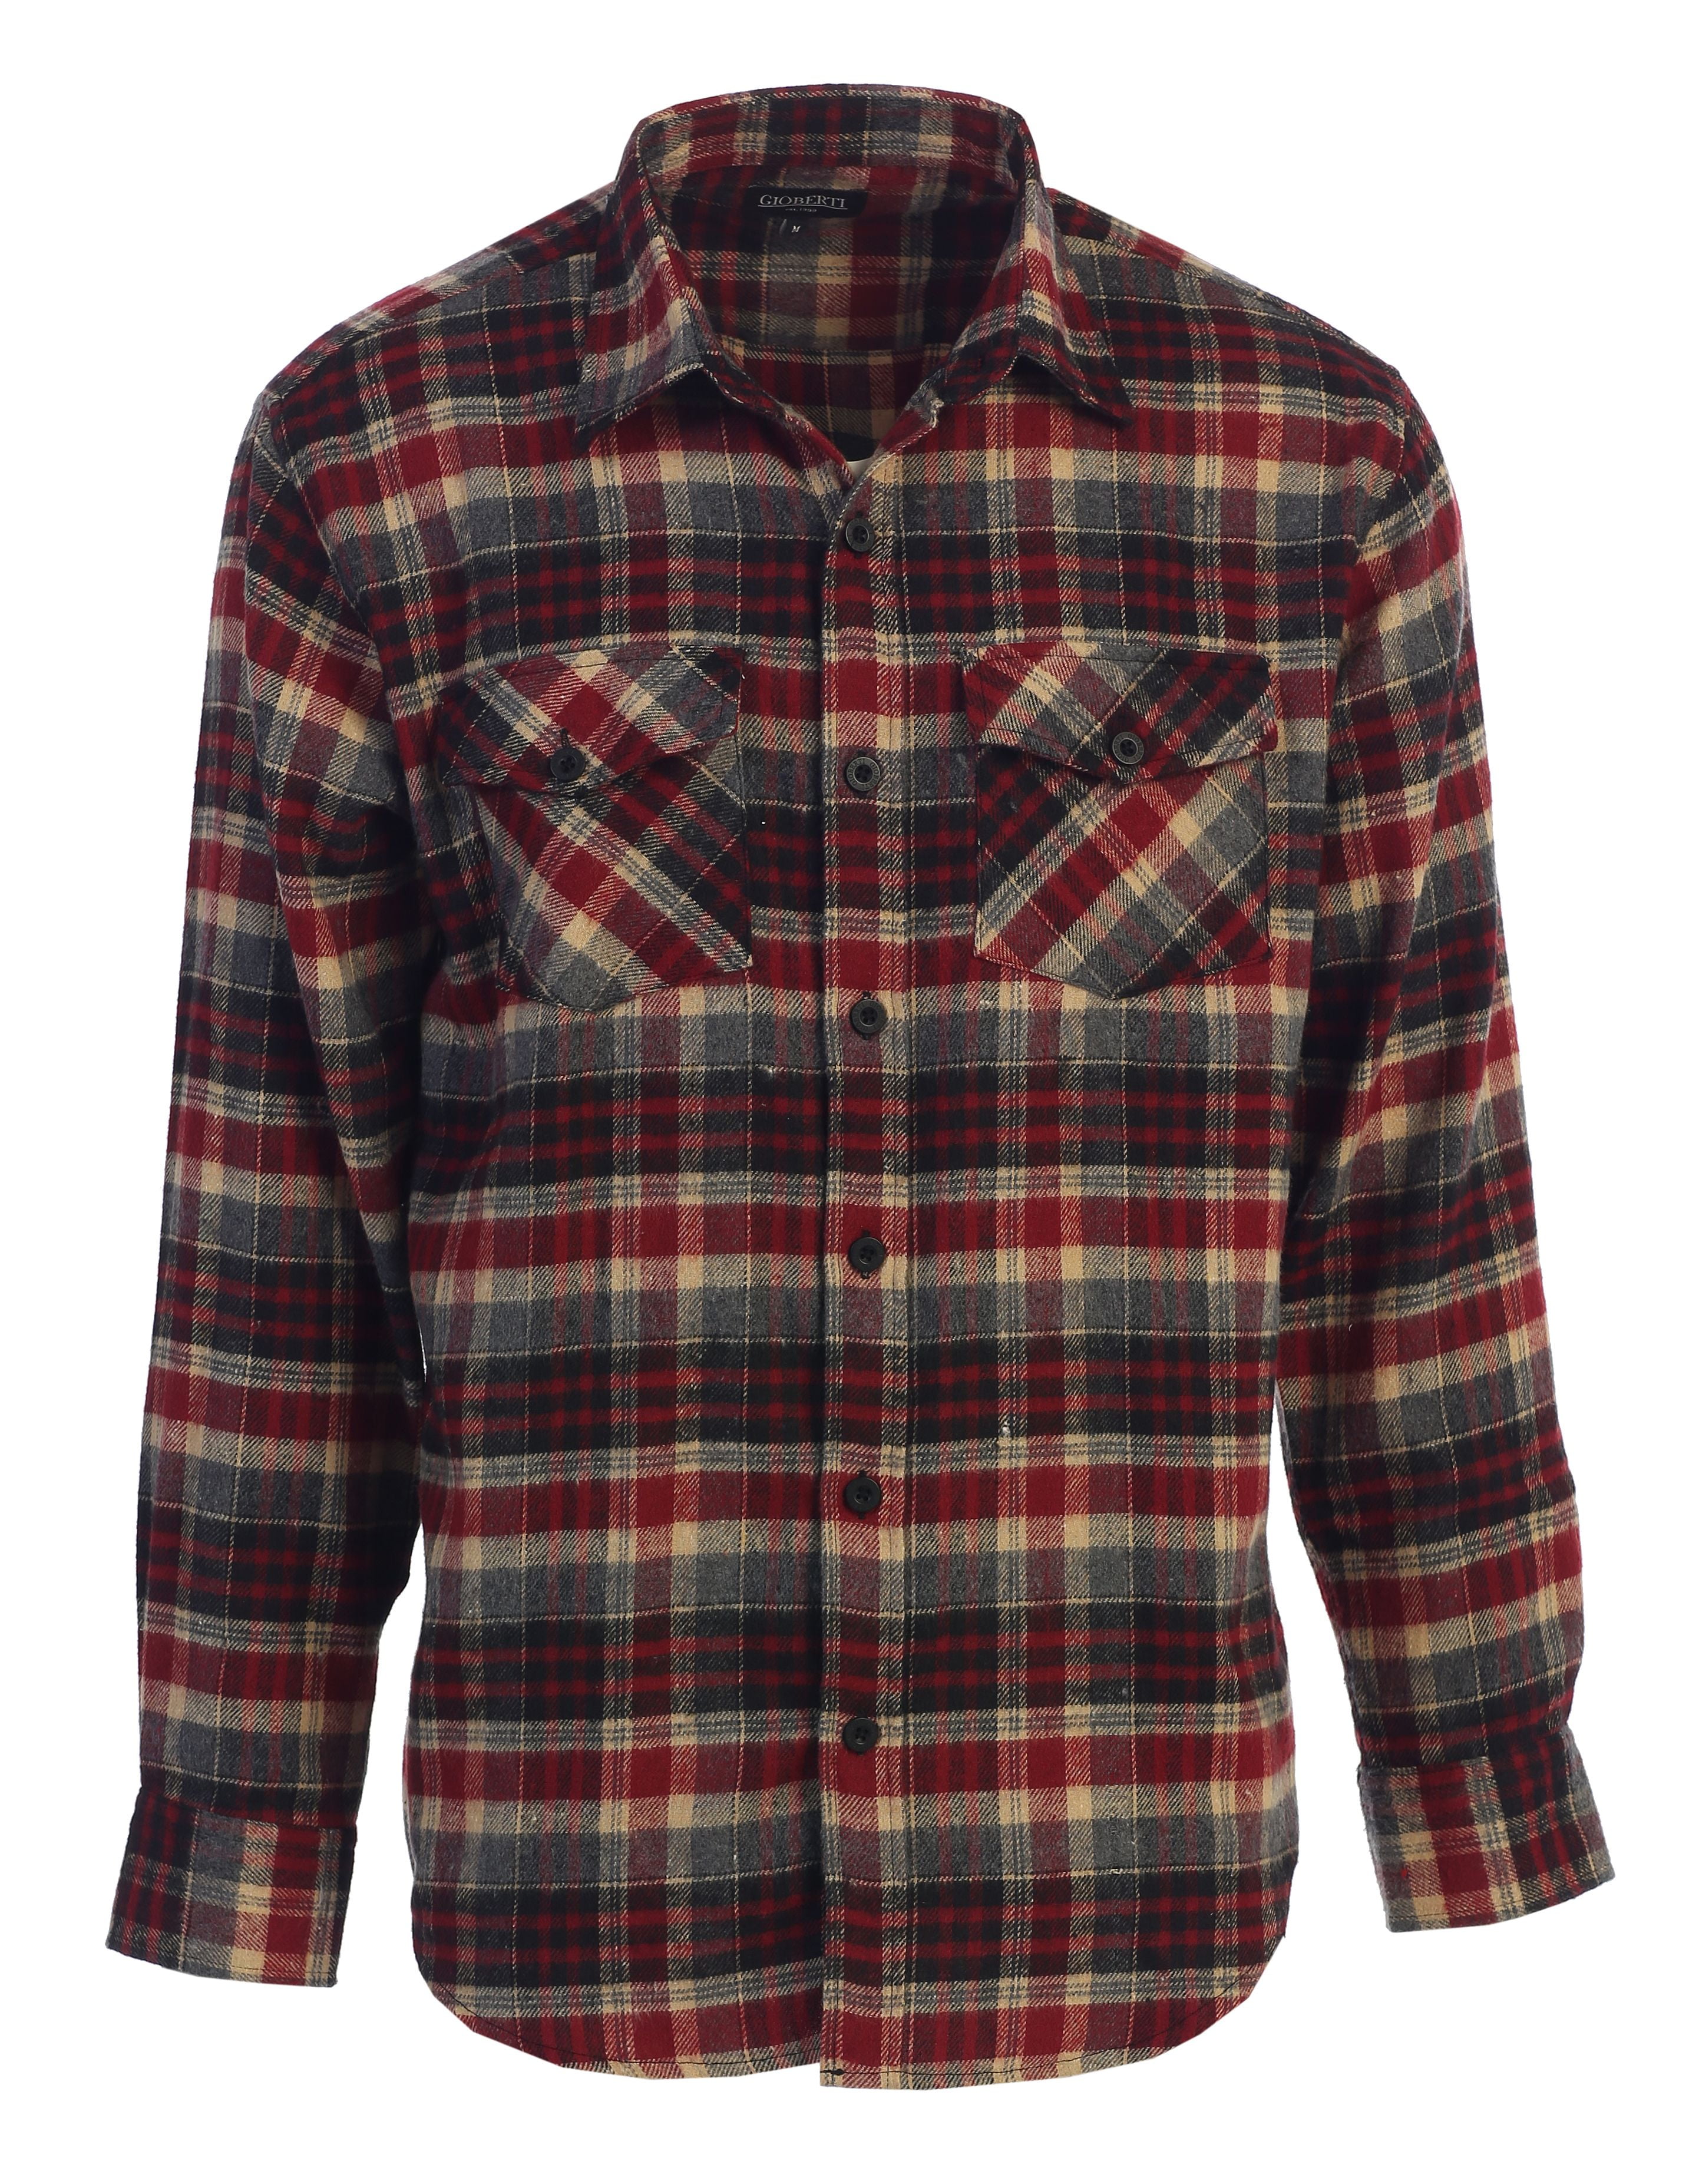 Gioberti Men's Flannel Shirt - Walmart.com